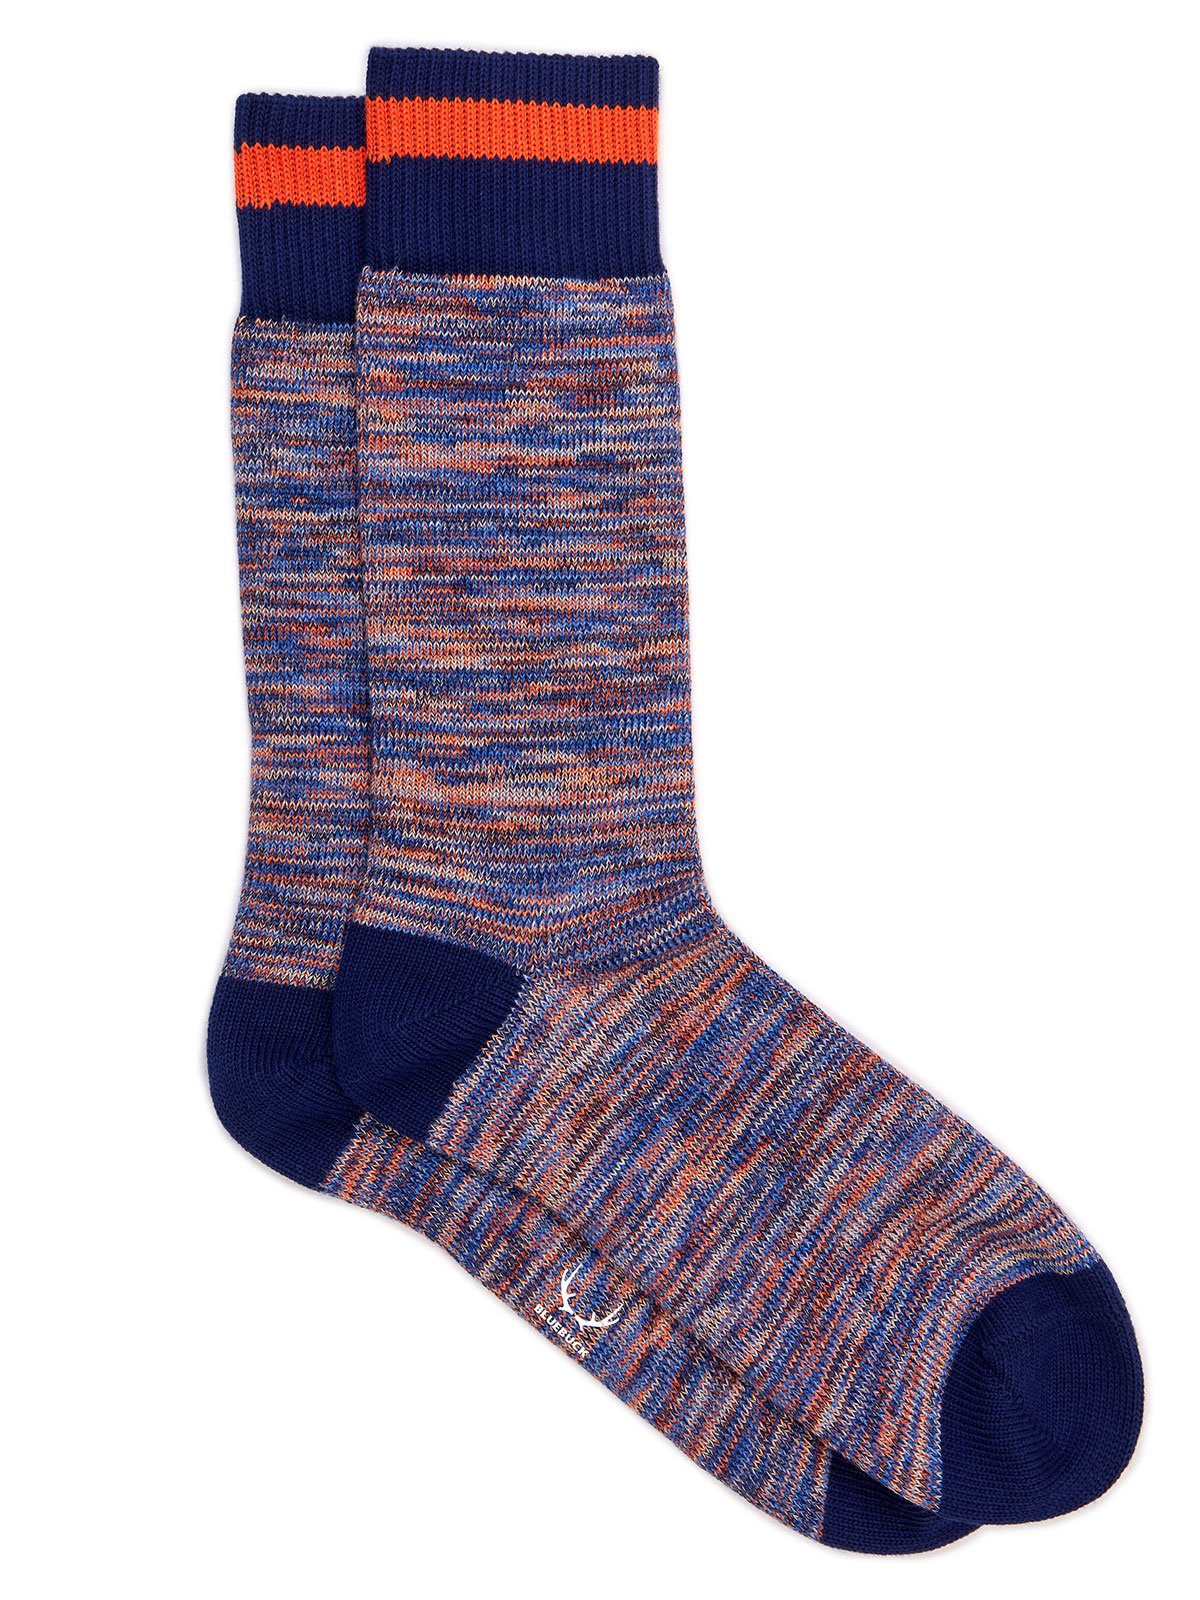 Nautical Socks | Orange/Blue